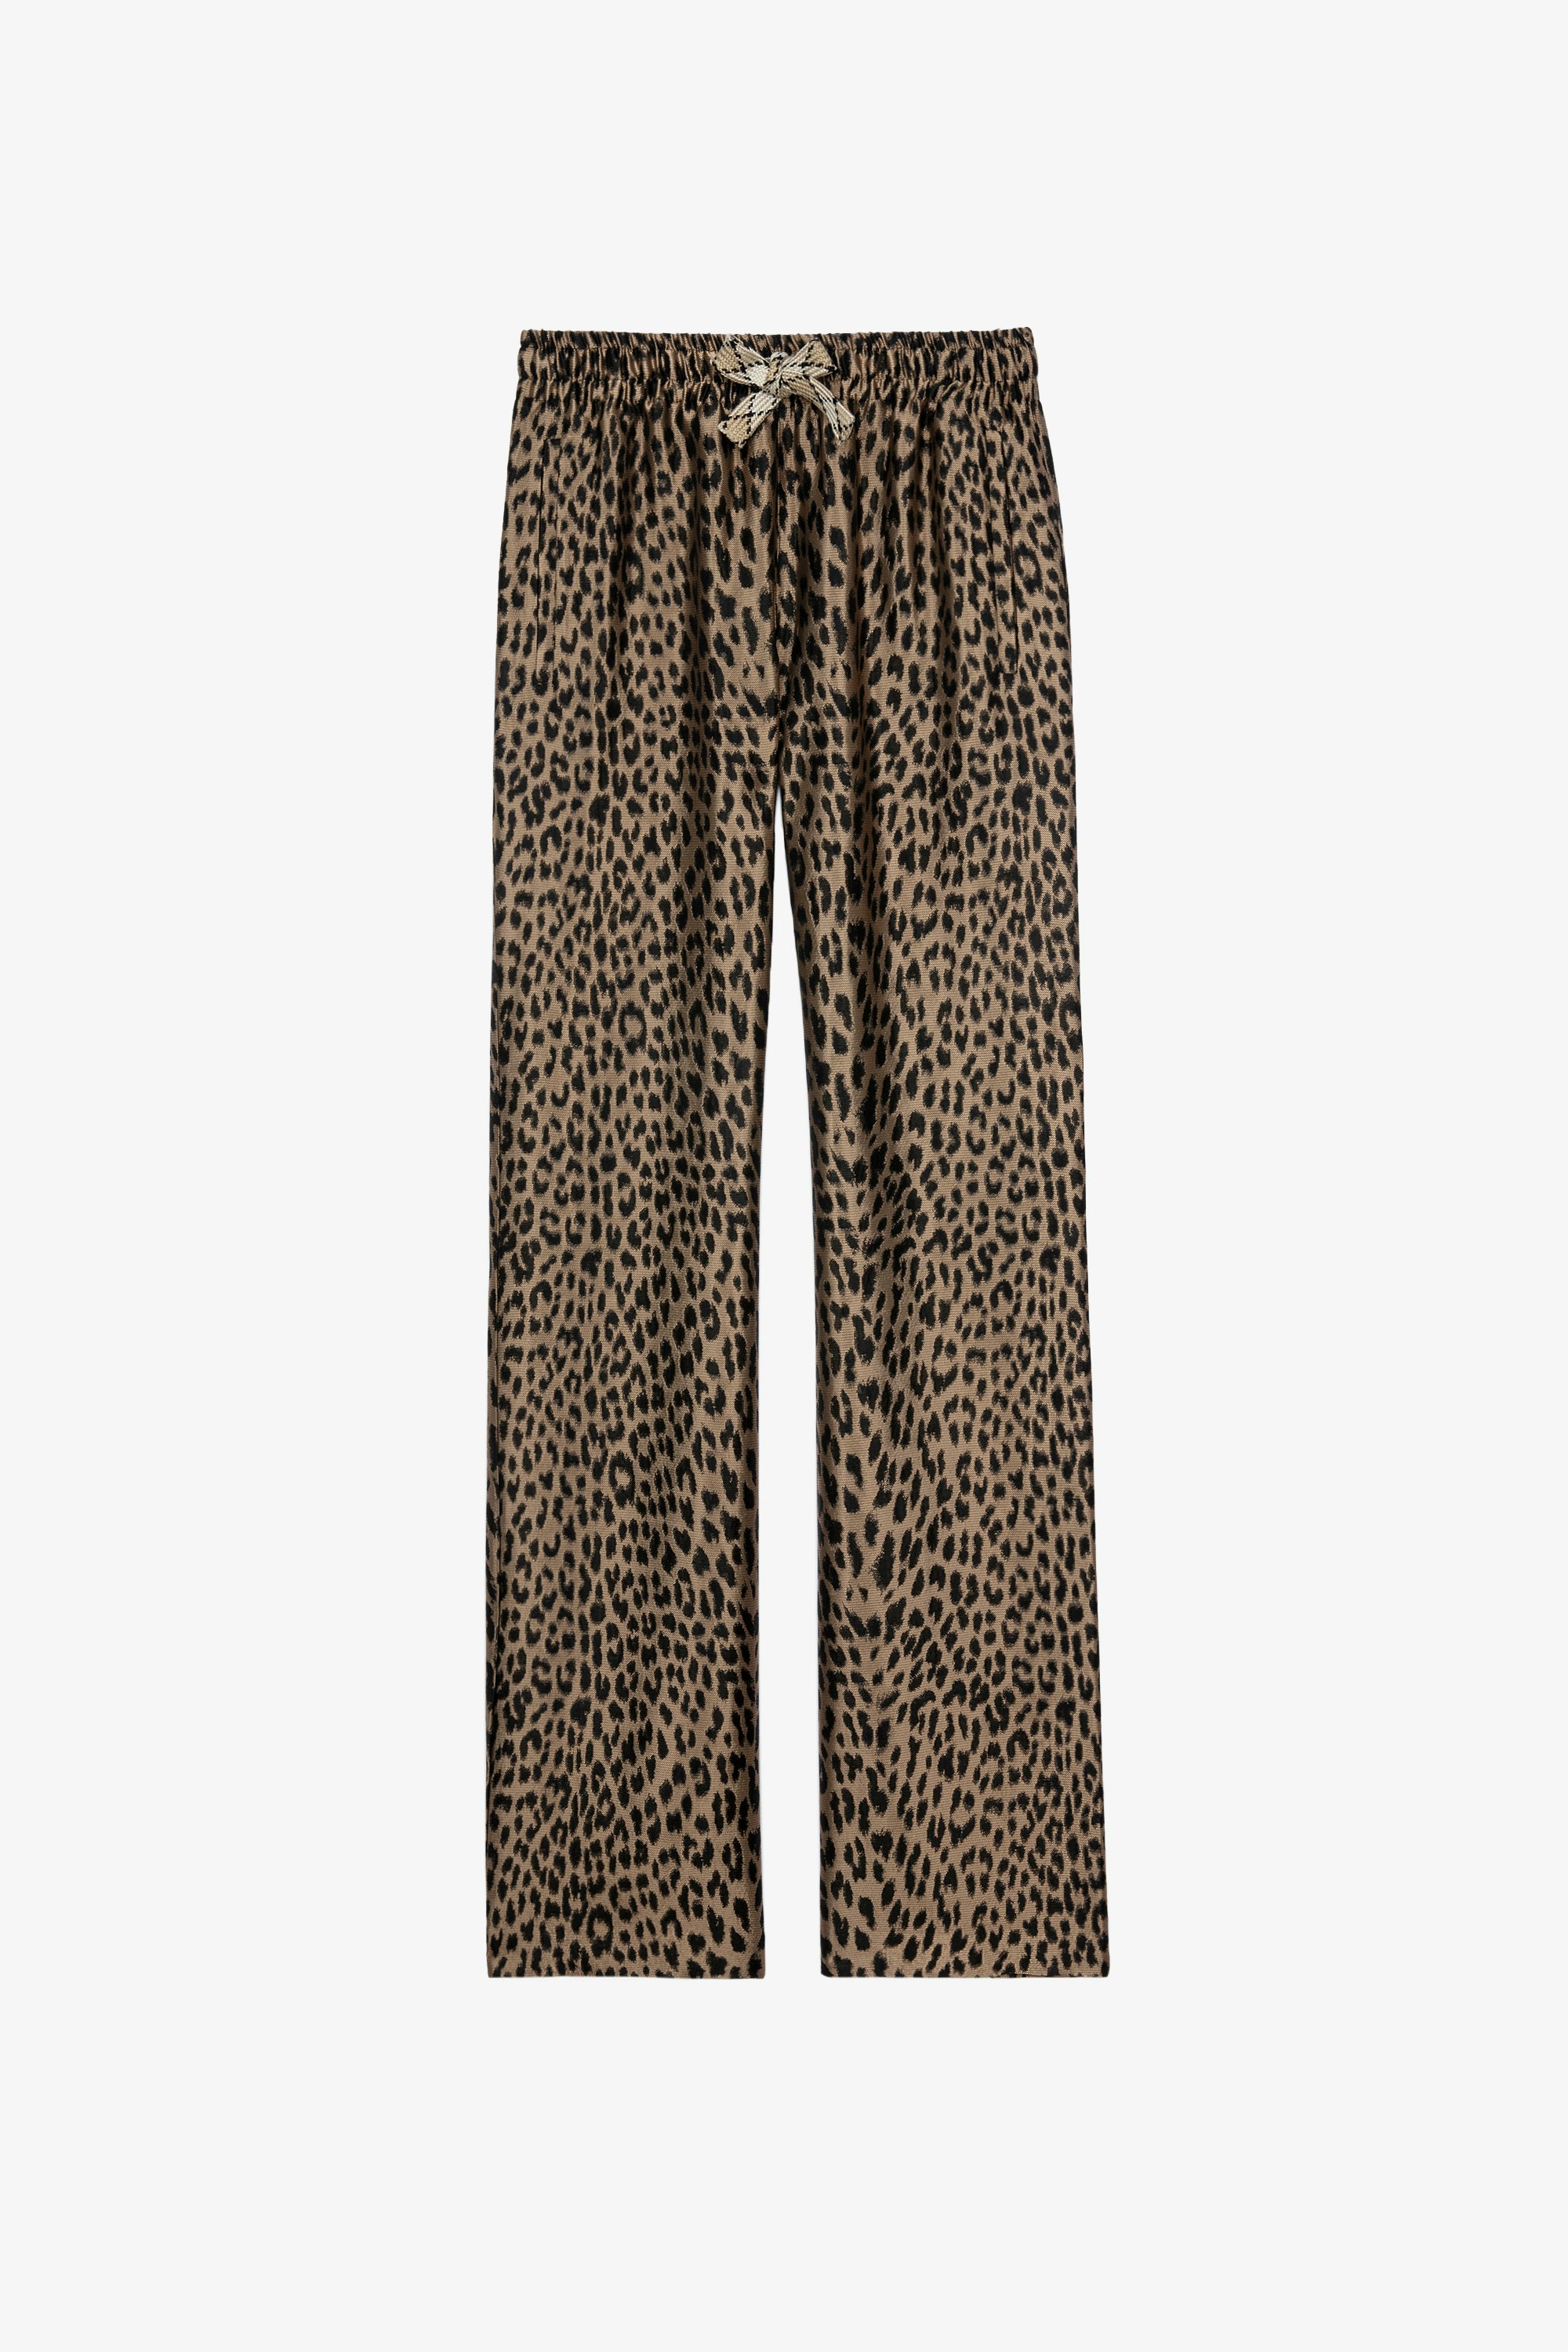 Pomy Jac Leo パンツ Women's Naturel trousers in leopard-print jacquard